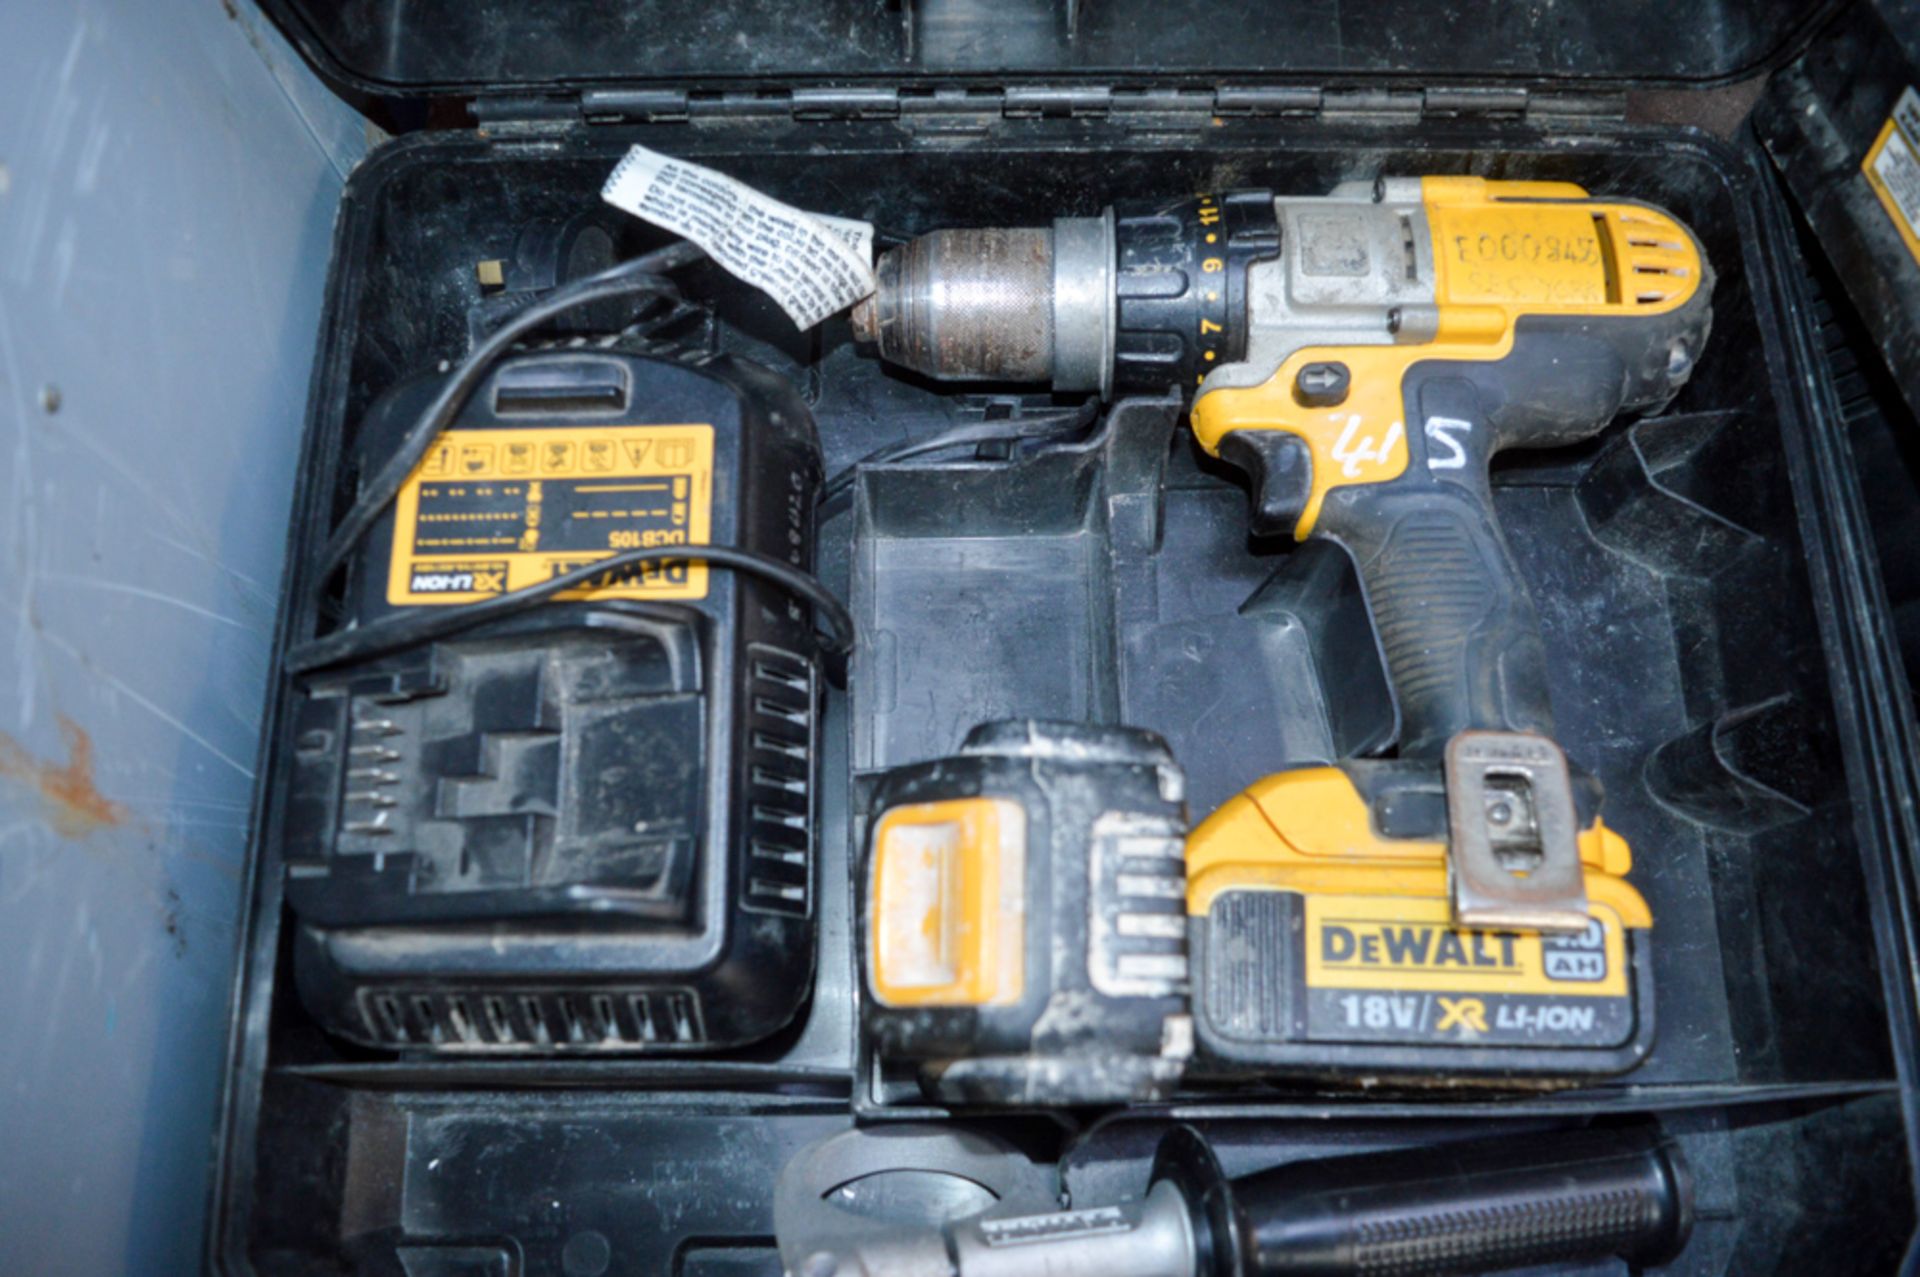 Dewalt 18v cordless SDS power drill c/w 2 batteries, charger & carry case